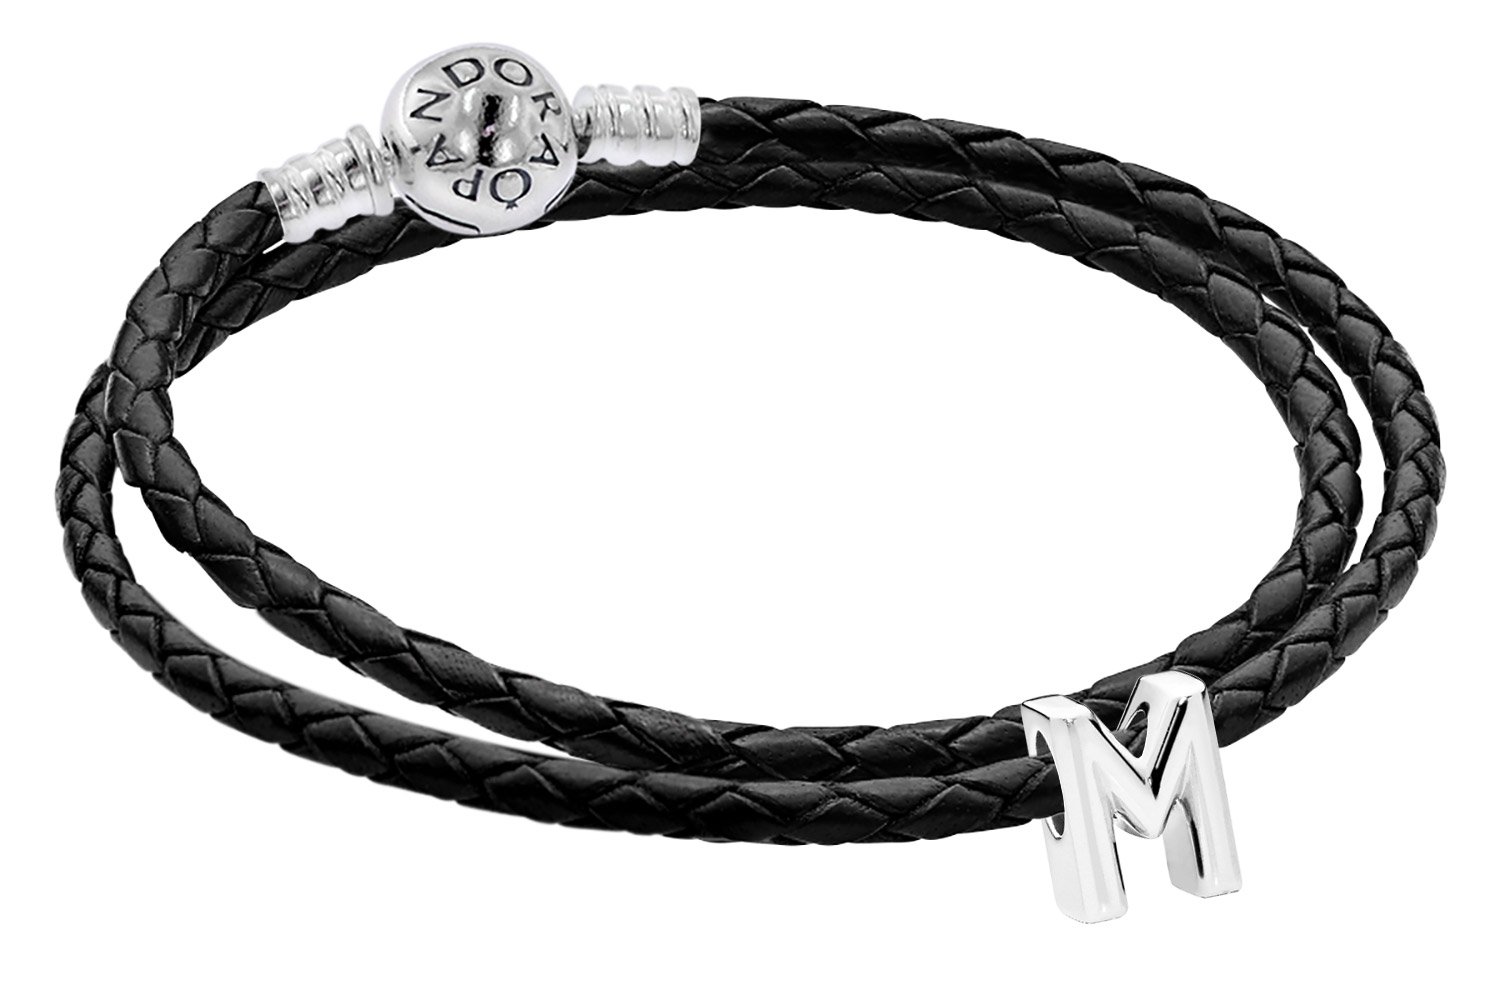 NEW Classic Men Womens Hand Chain Bracelet Set Original Box For Pandora 925  Sterling Silver Bracelets Jewelry Accessories From Afine, $15.83 |  DHgate.Com